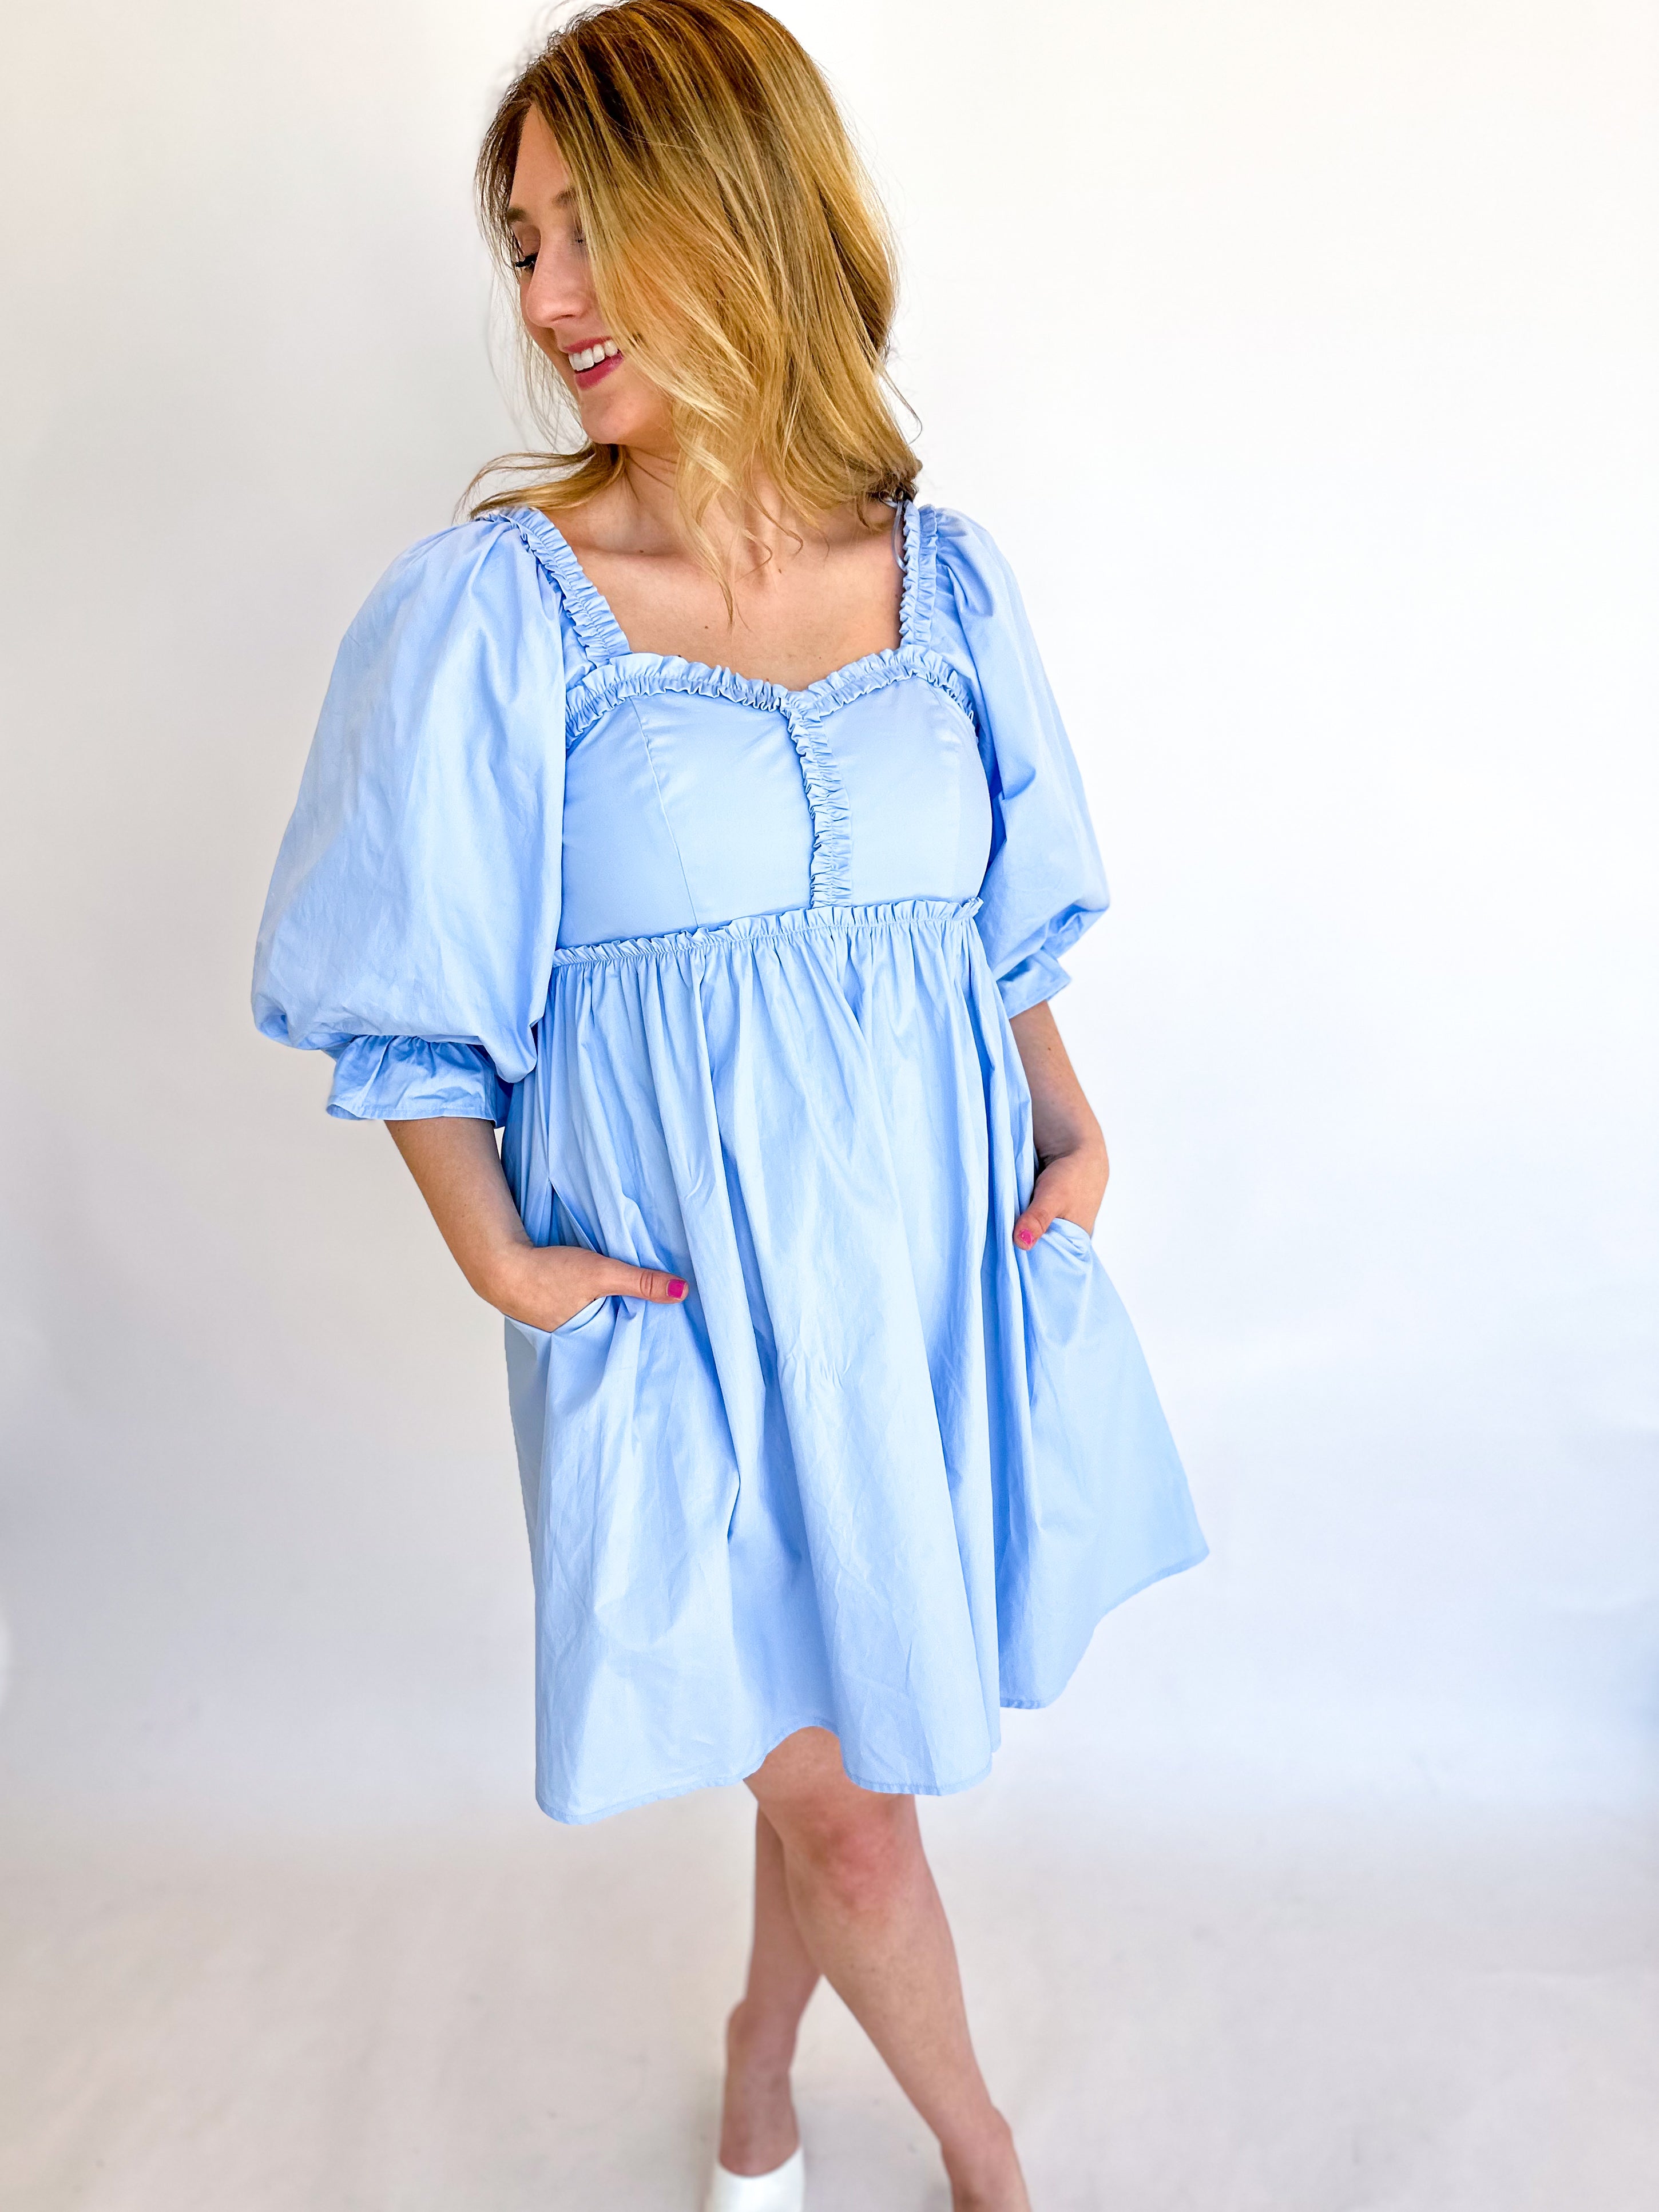 Pastel Blue Mini Dress-510 Mini-FANTASTIC FAWN-July & June Women's Fashion Boutique Located in San Antonio, Texas